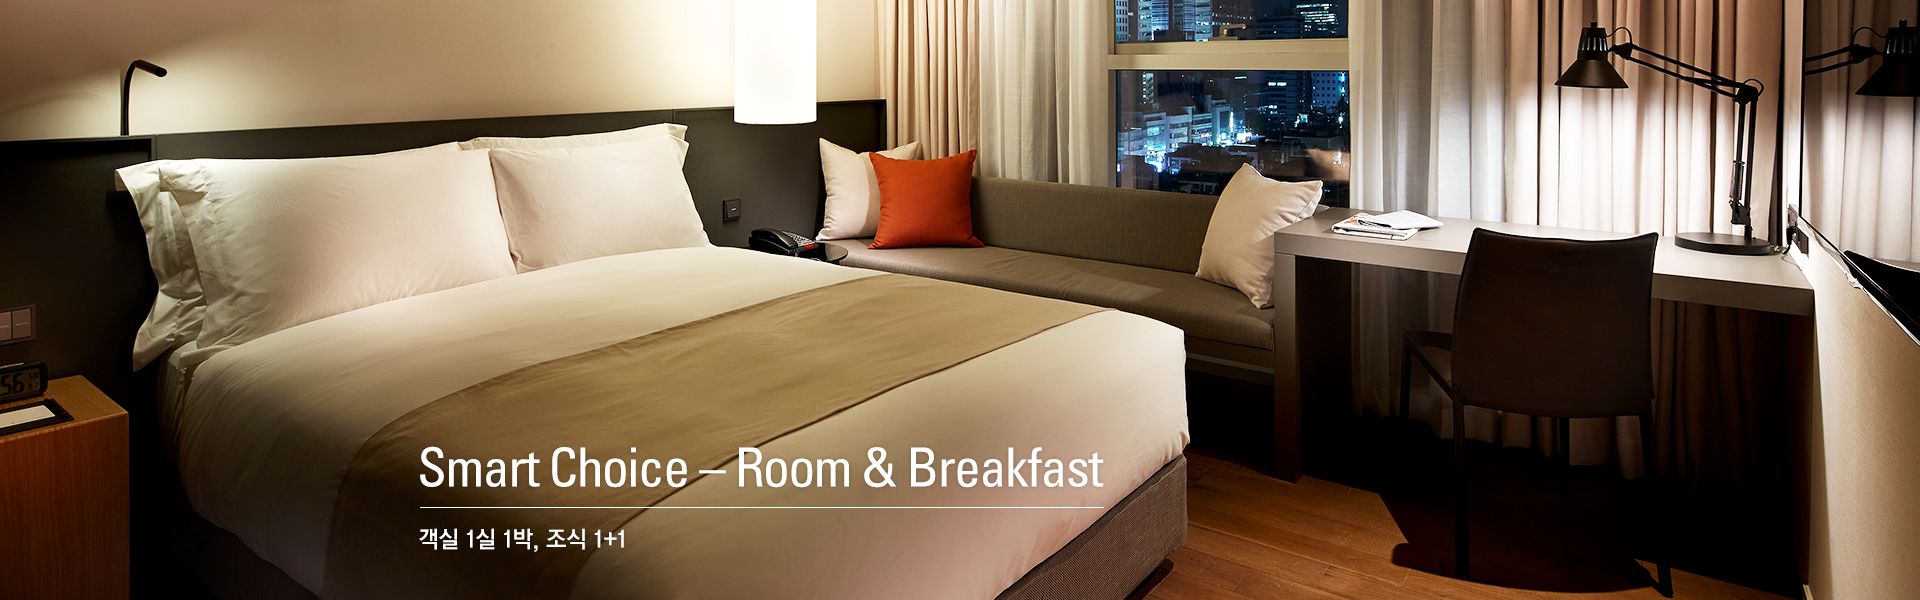 Smart Choice – Room & Breakfast 